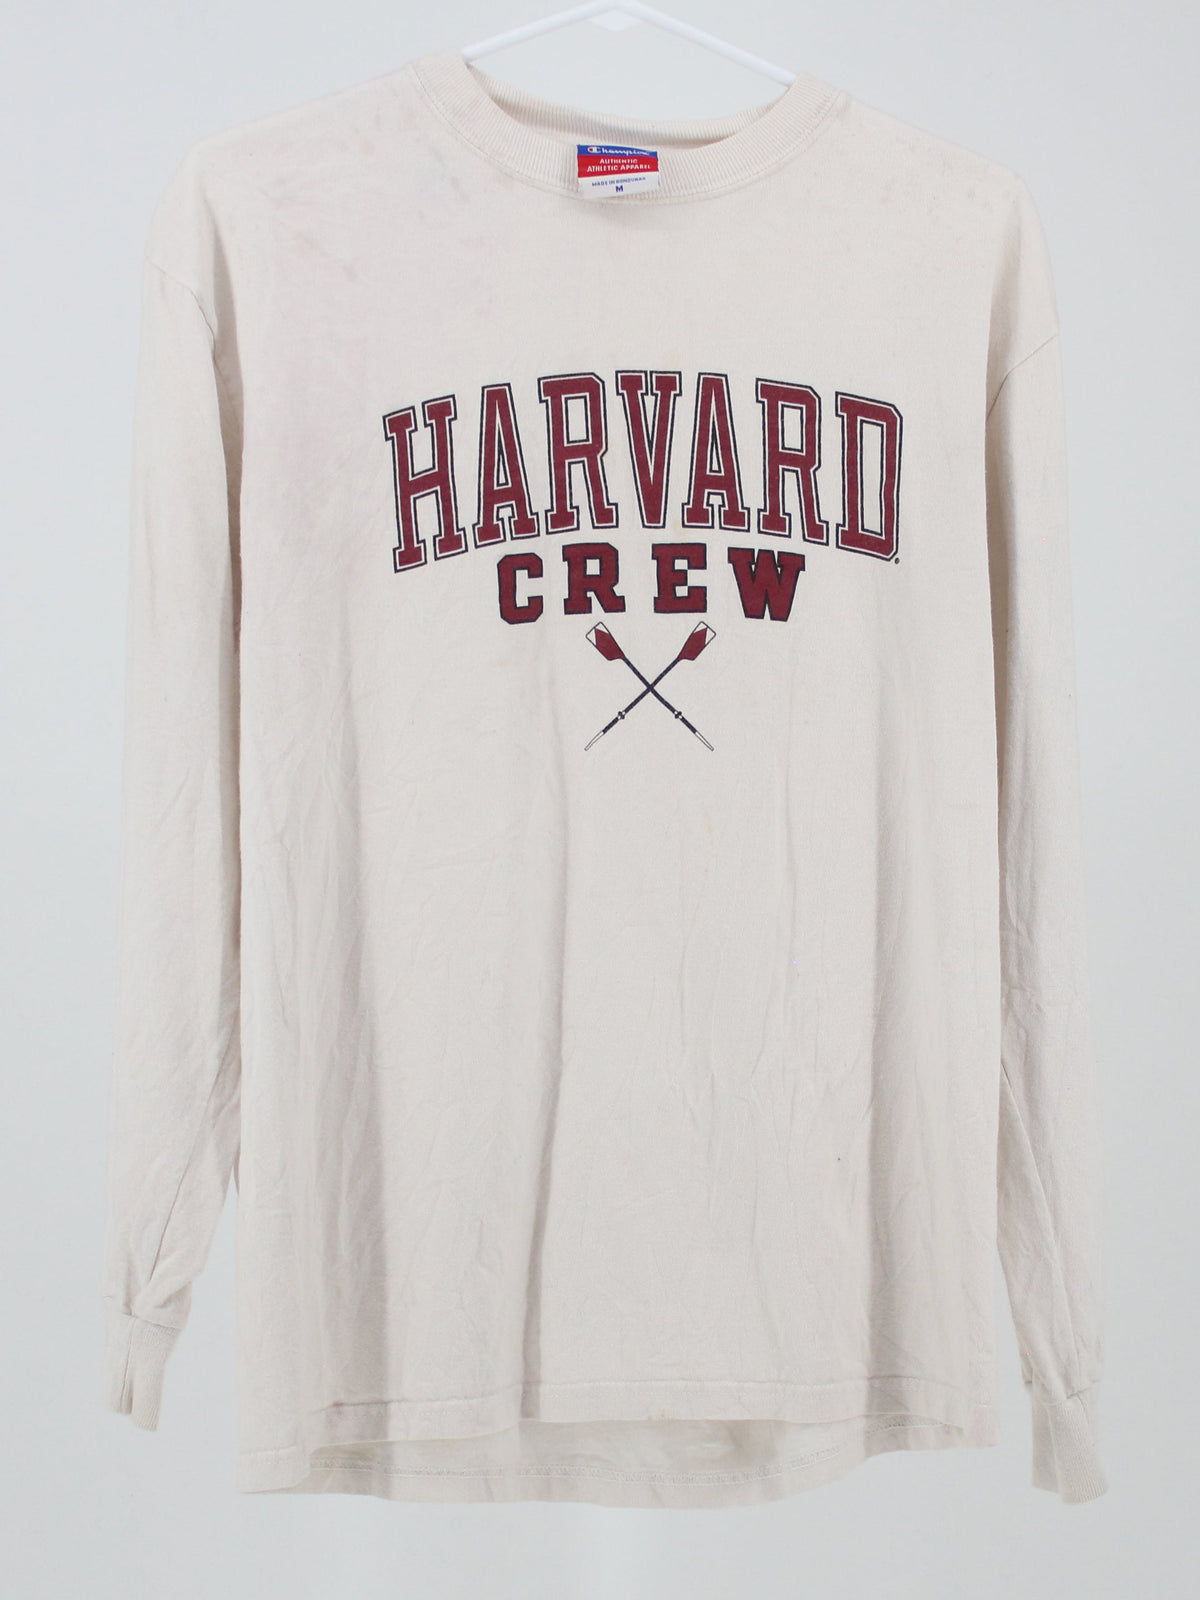 Champion Harvard Crew Logo Tee